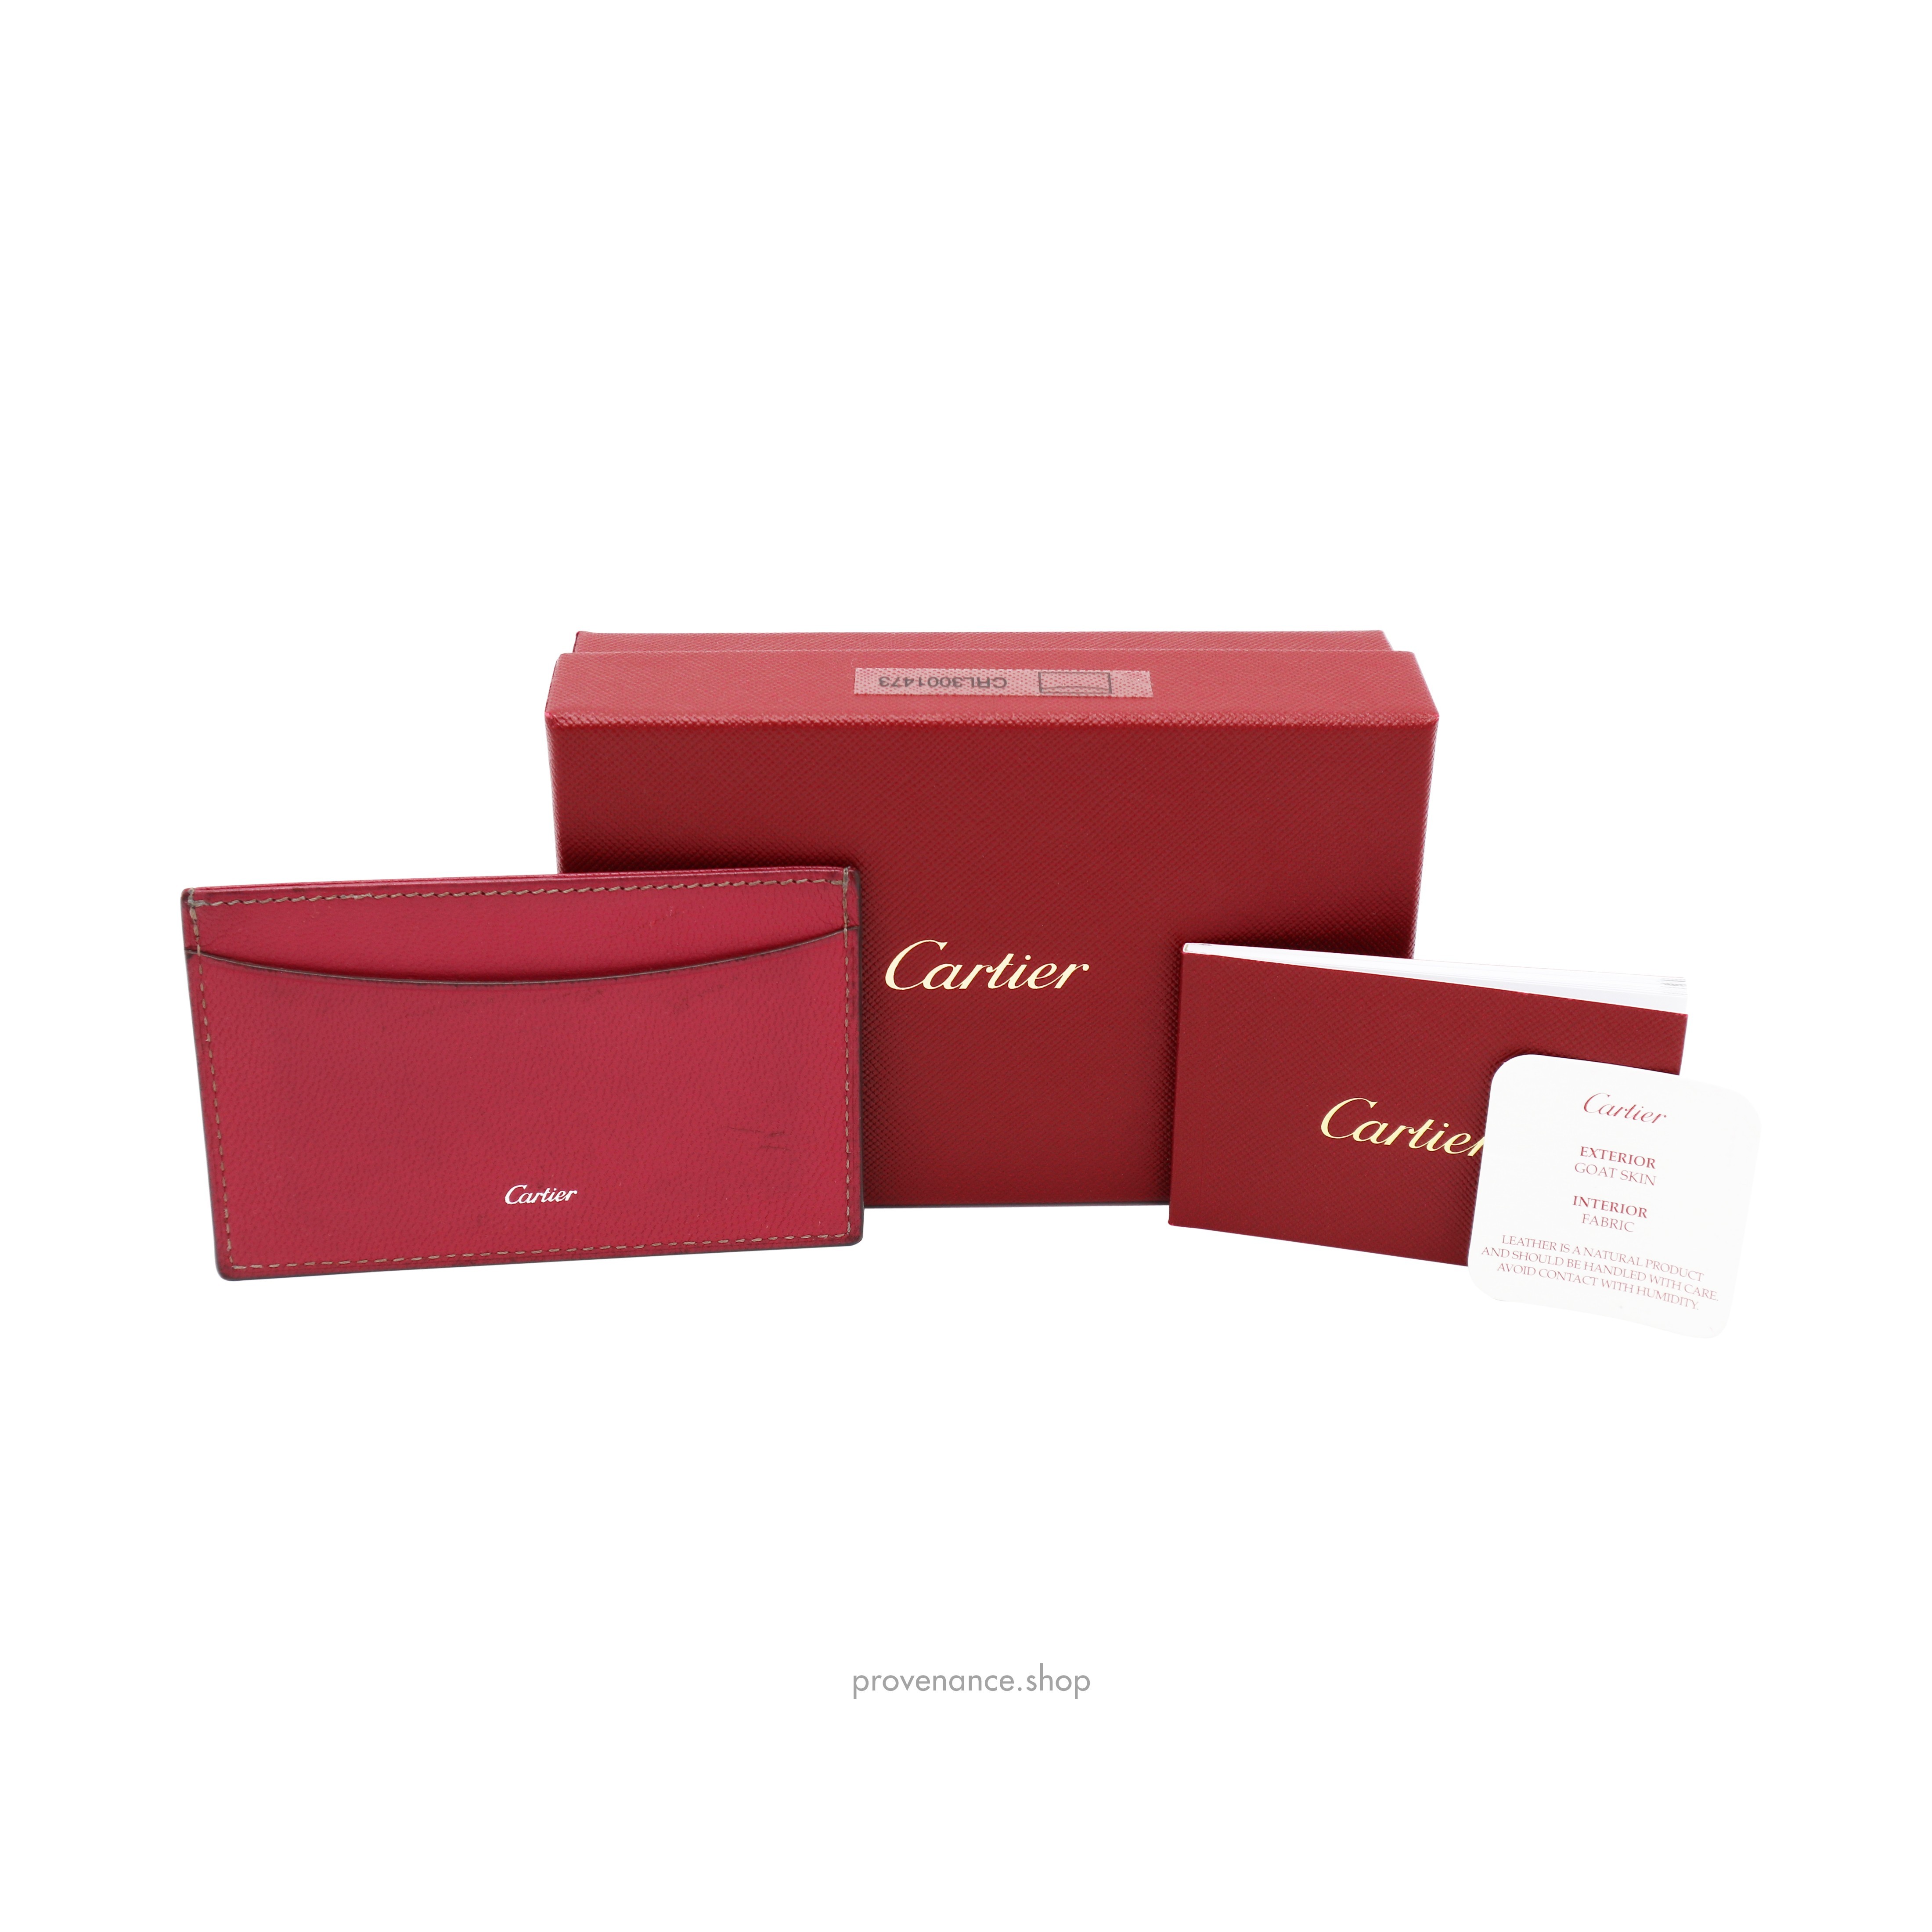 Cartier Card Holder - Raspberry Chevre Leather - 1